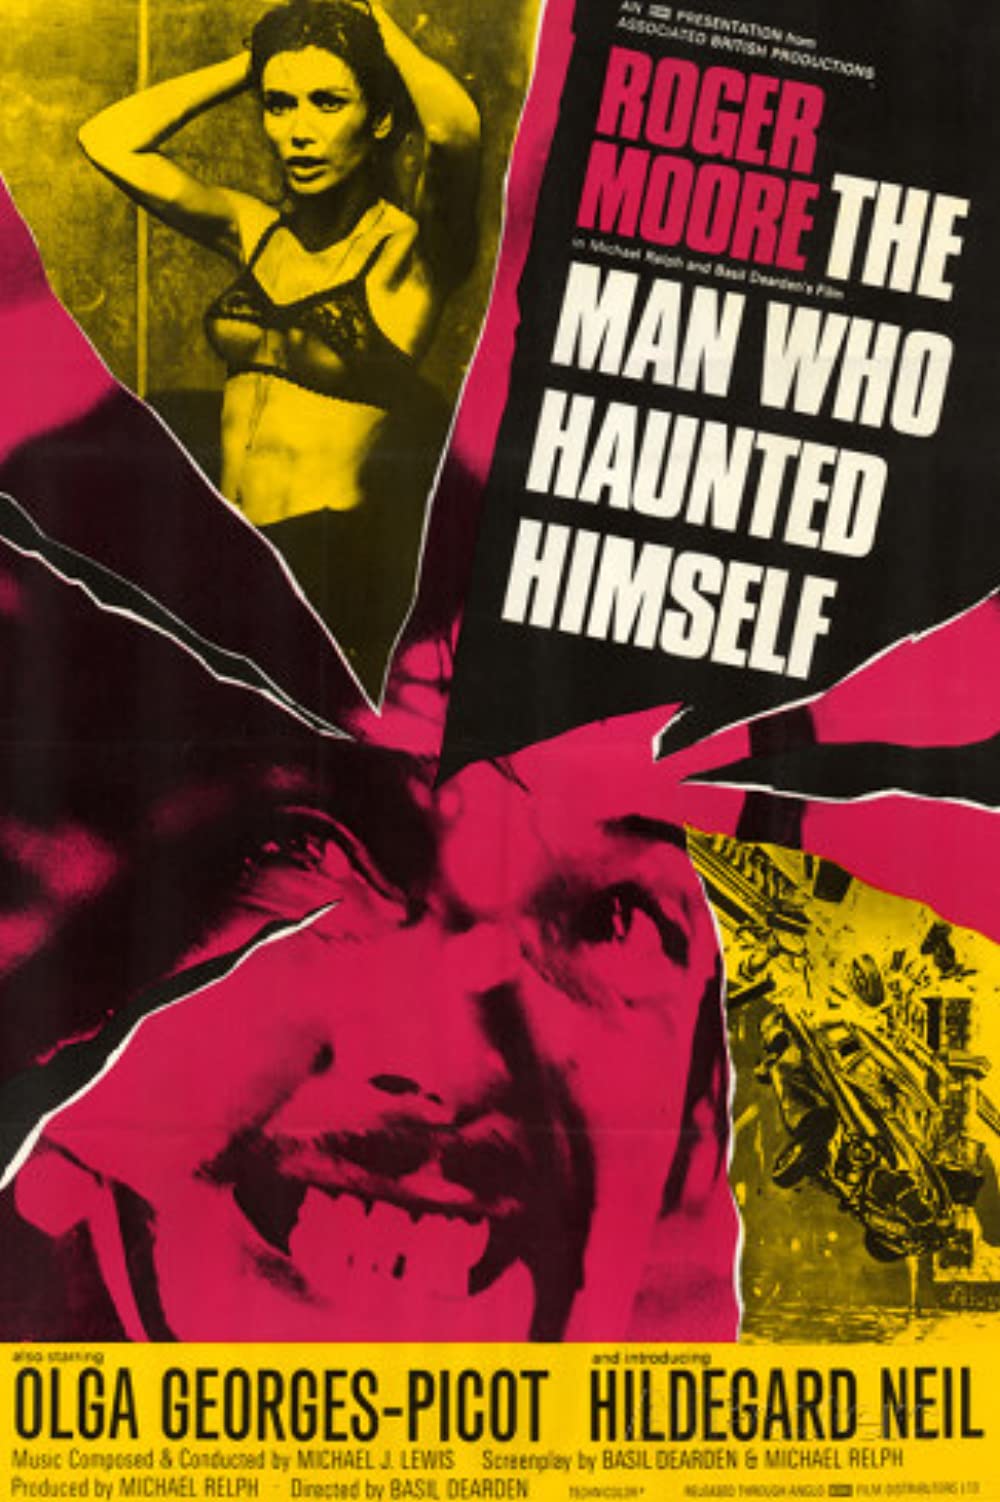 Filmbeschreibung zu The Man Who Haunted Himself